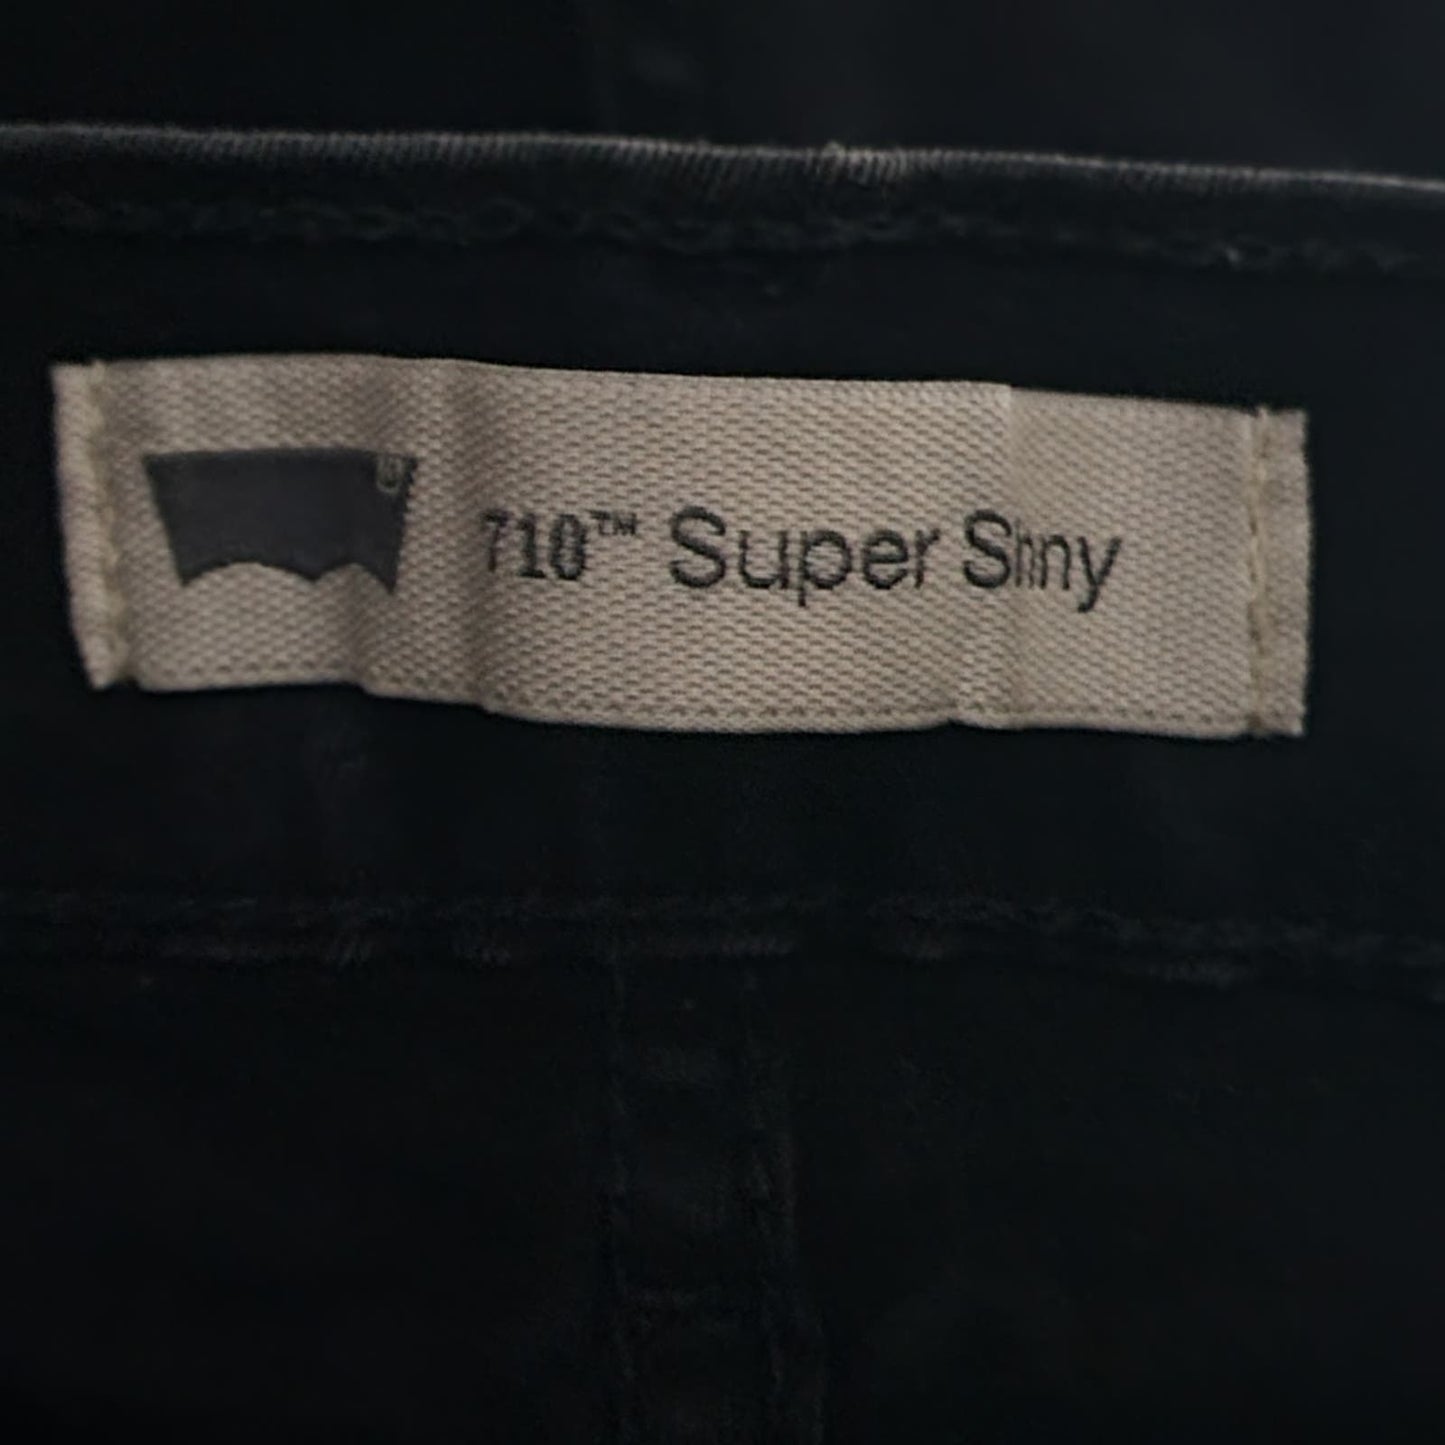 Levi 710 Super Skinny Black Denim Jeans